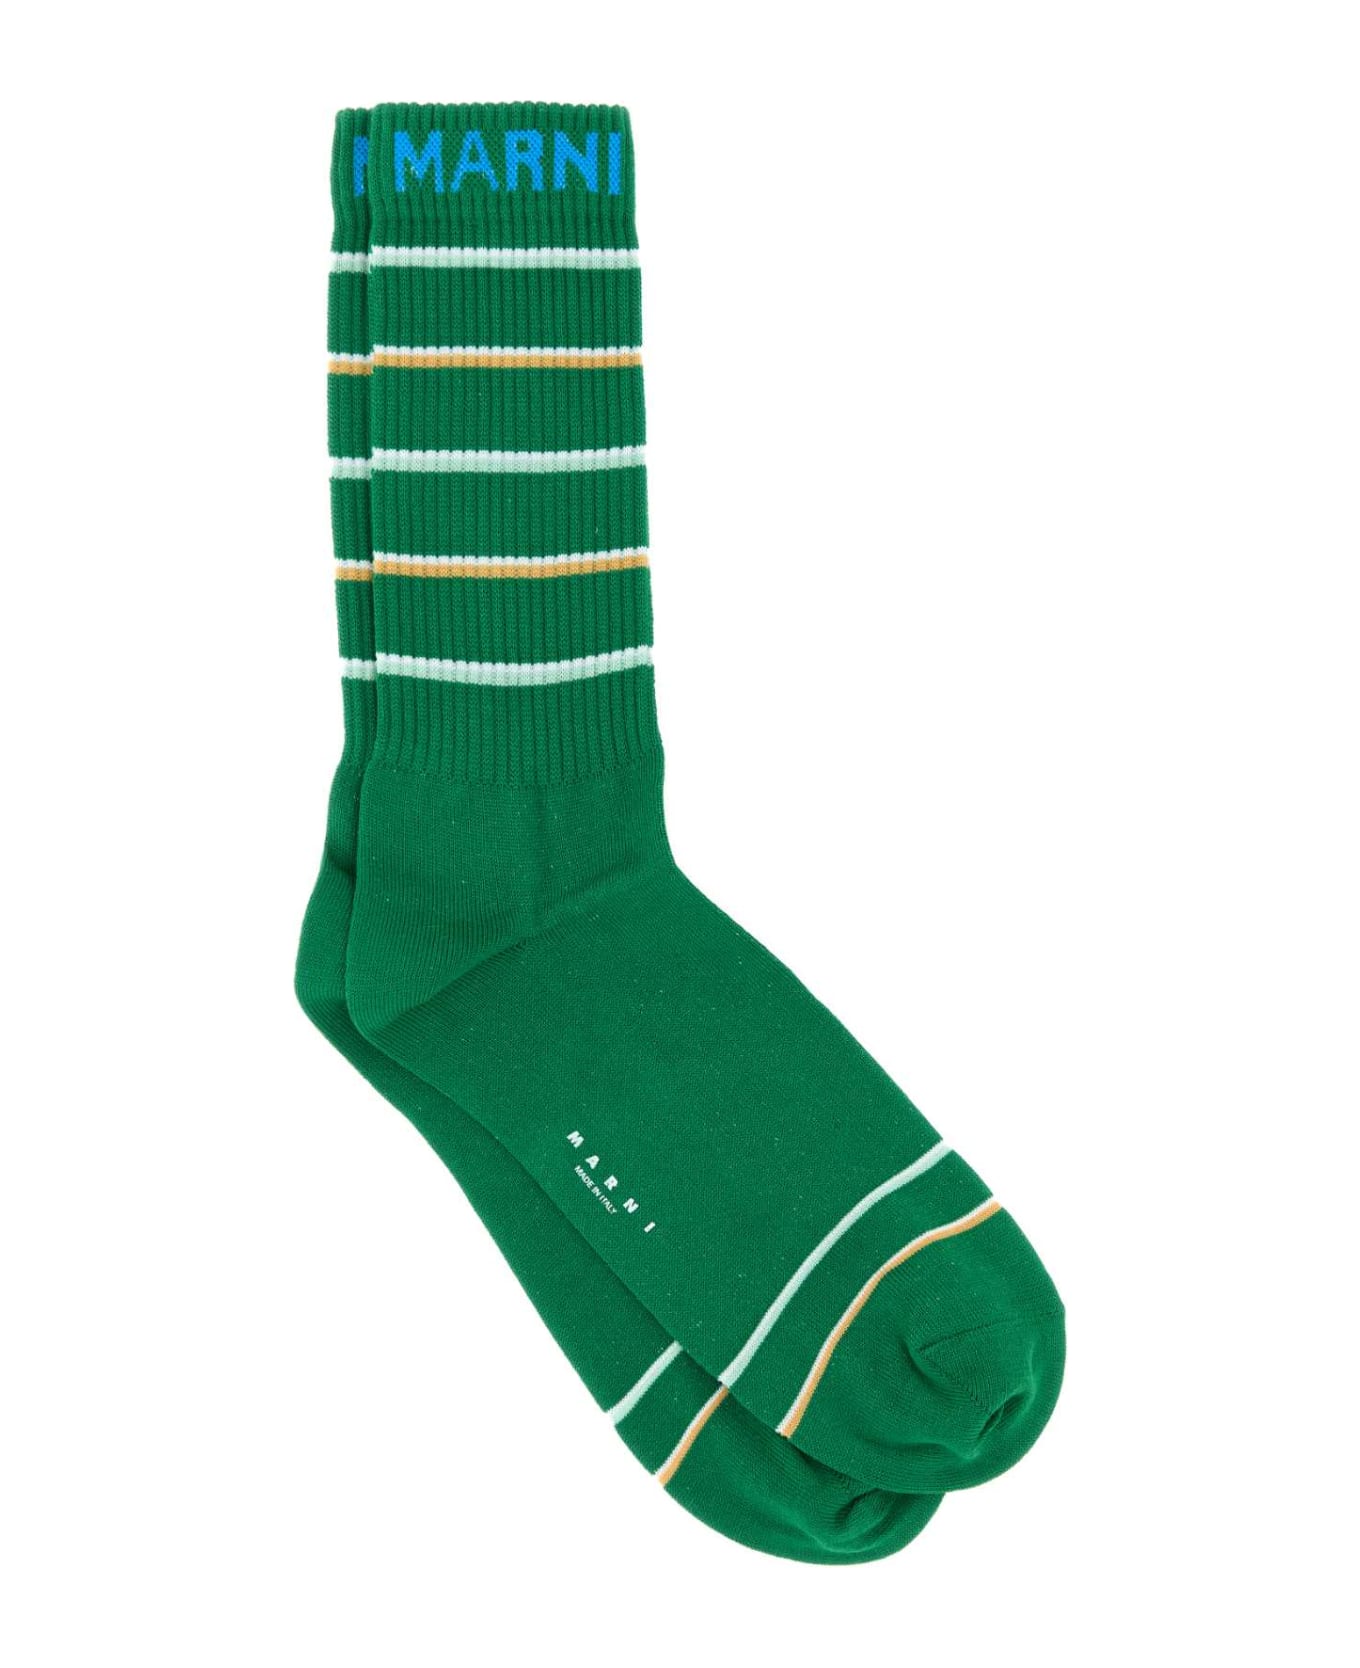 Marni Green Cotton Blend Socks - SEAGREEN 靴下